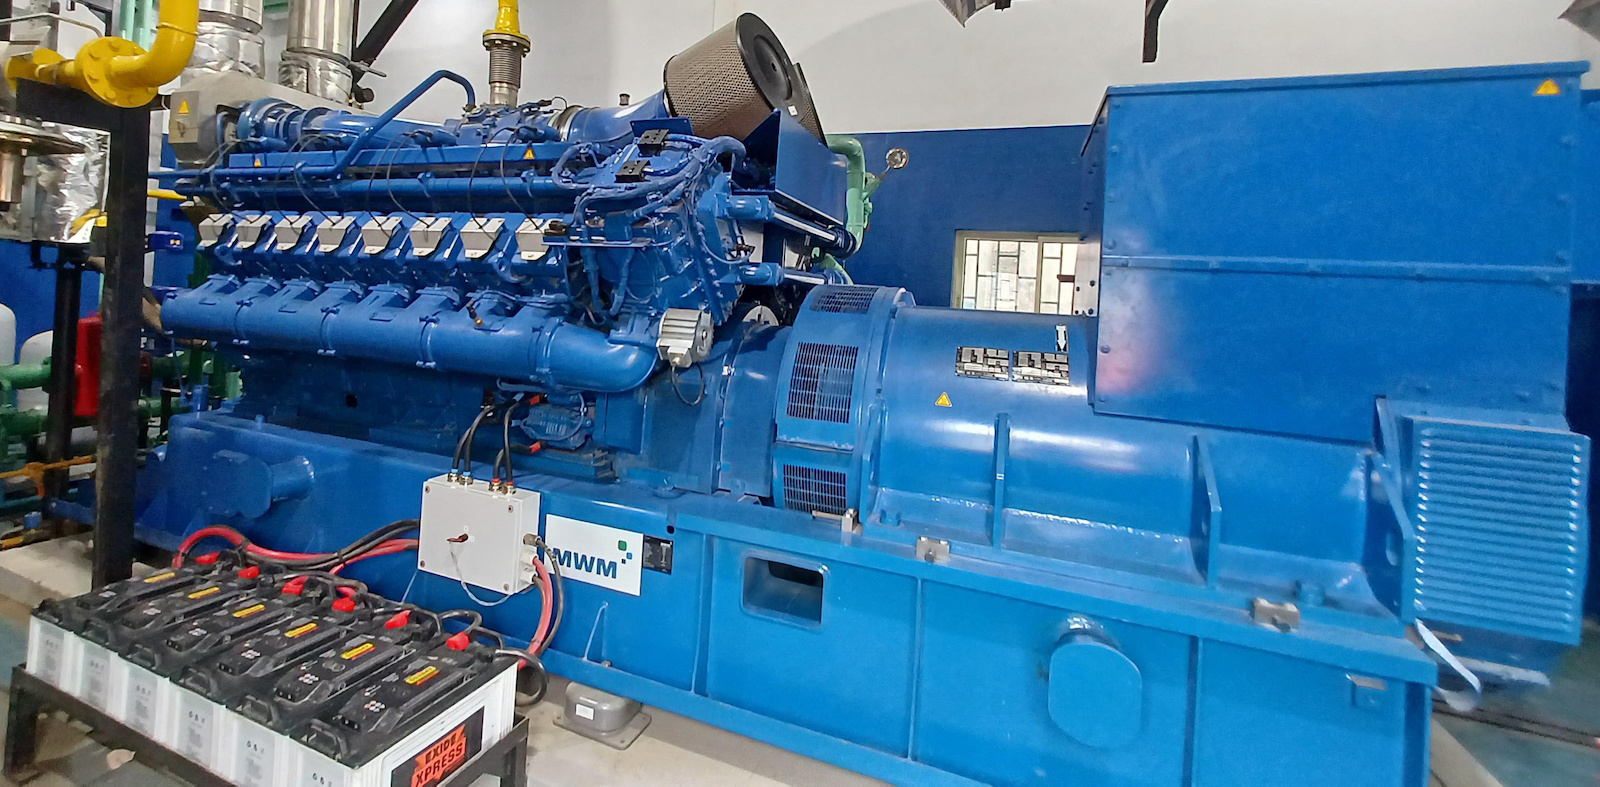 Ein neuer MWM TCG 3020 V16 Gasmotor für Panar Group of Companies in Nigeria. © Green Power International